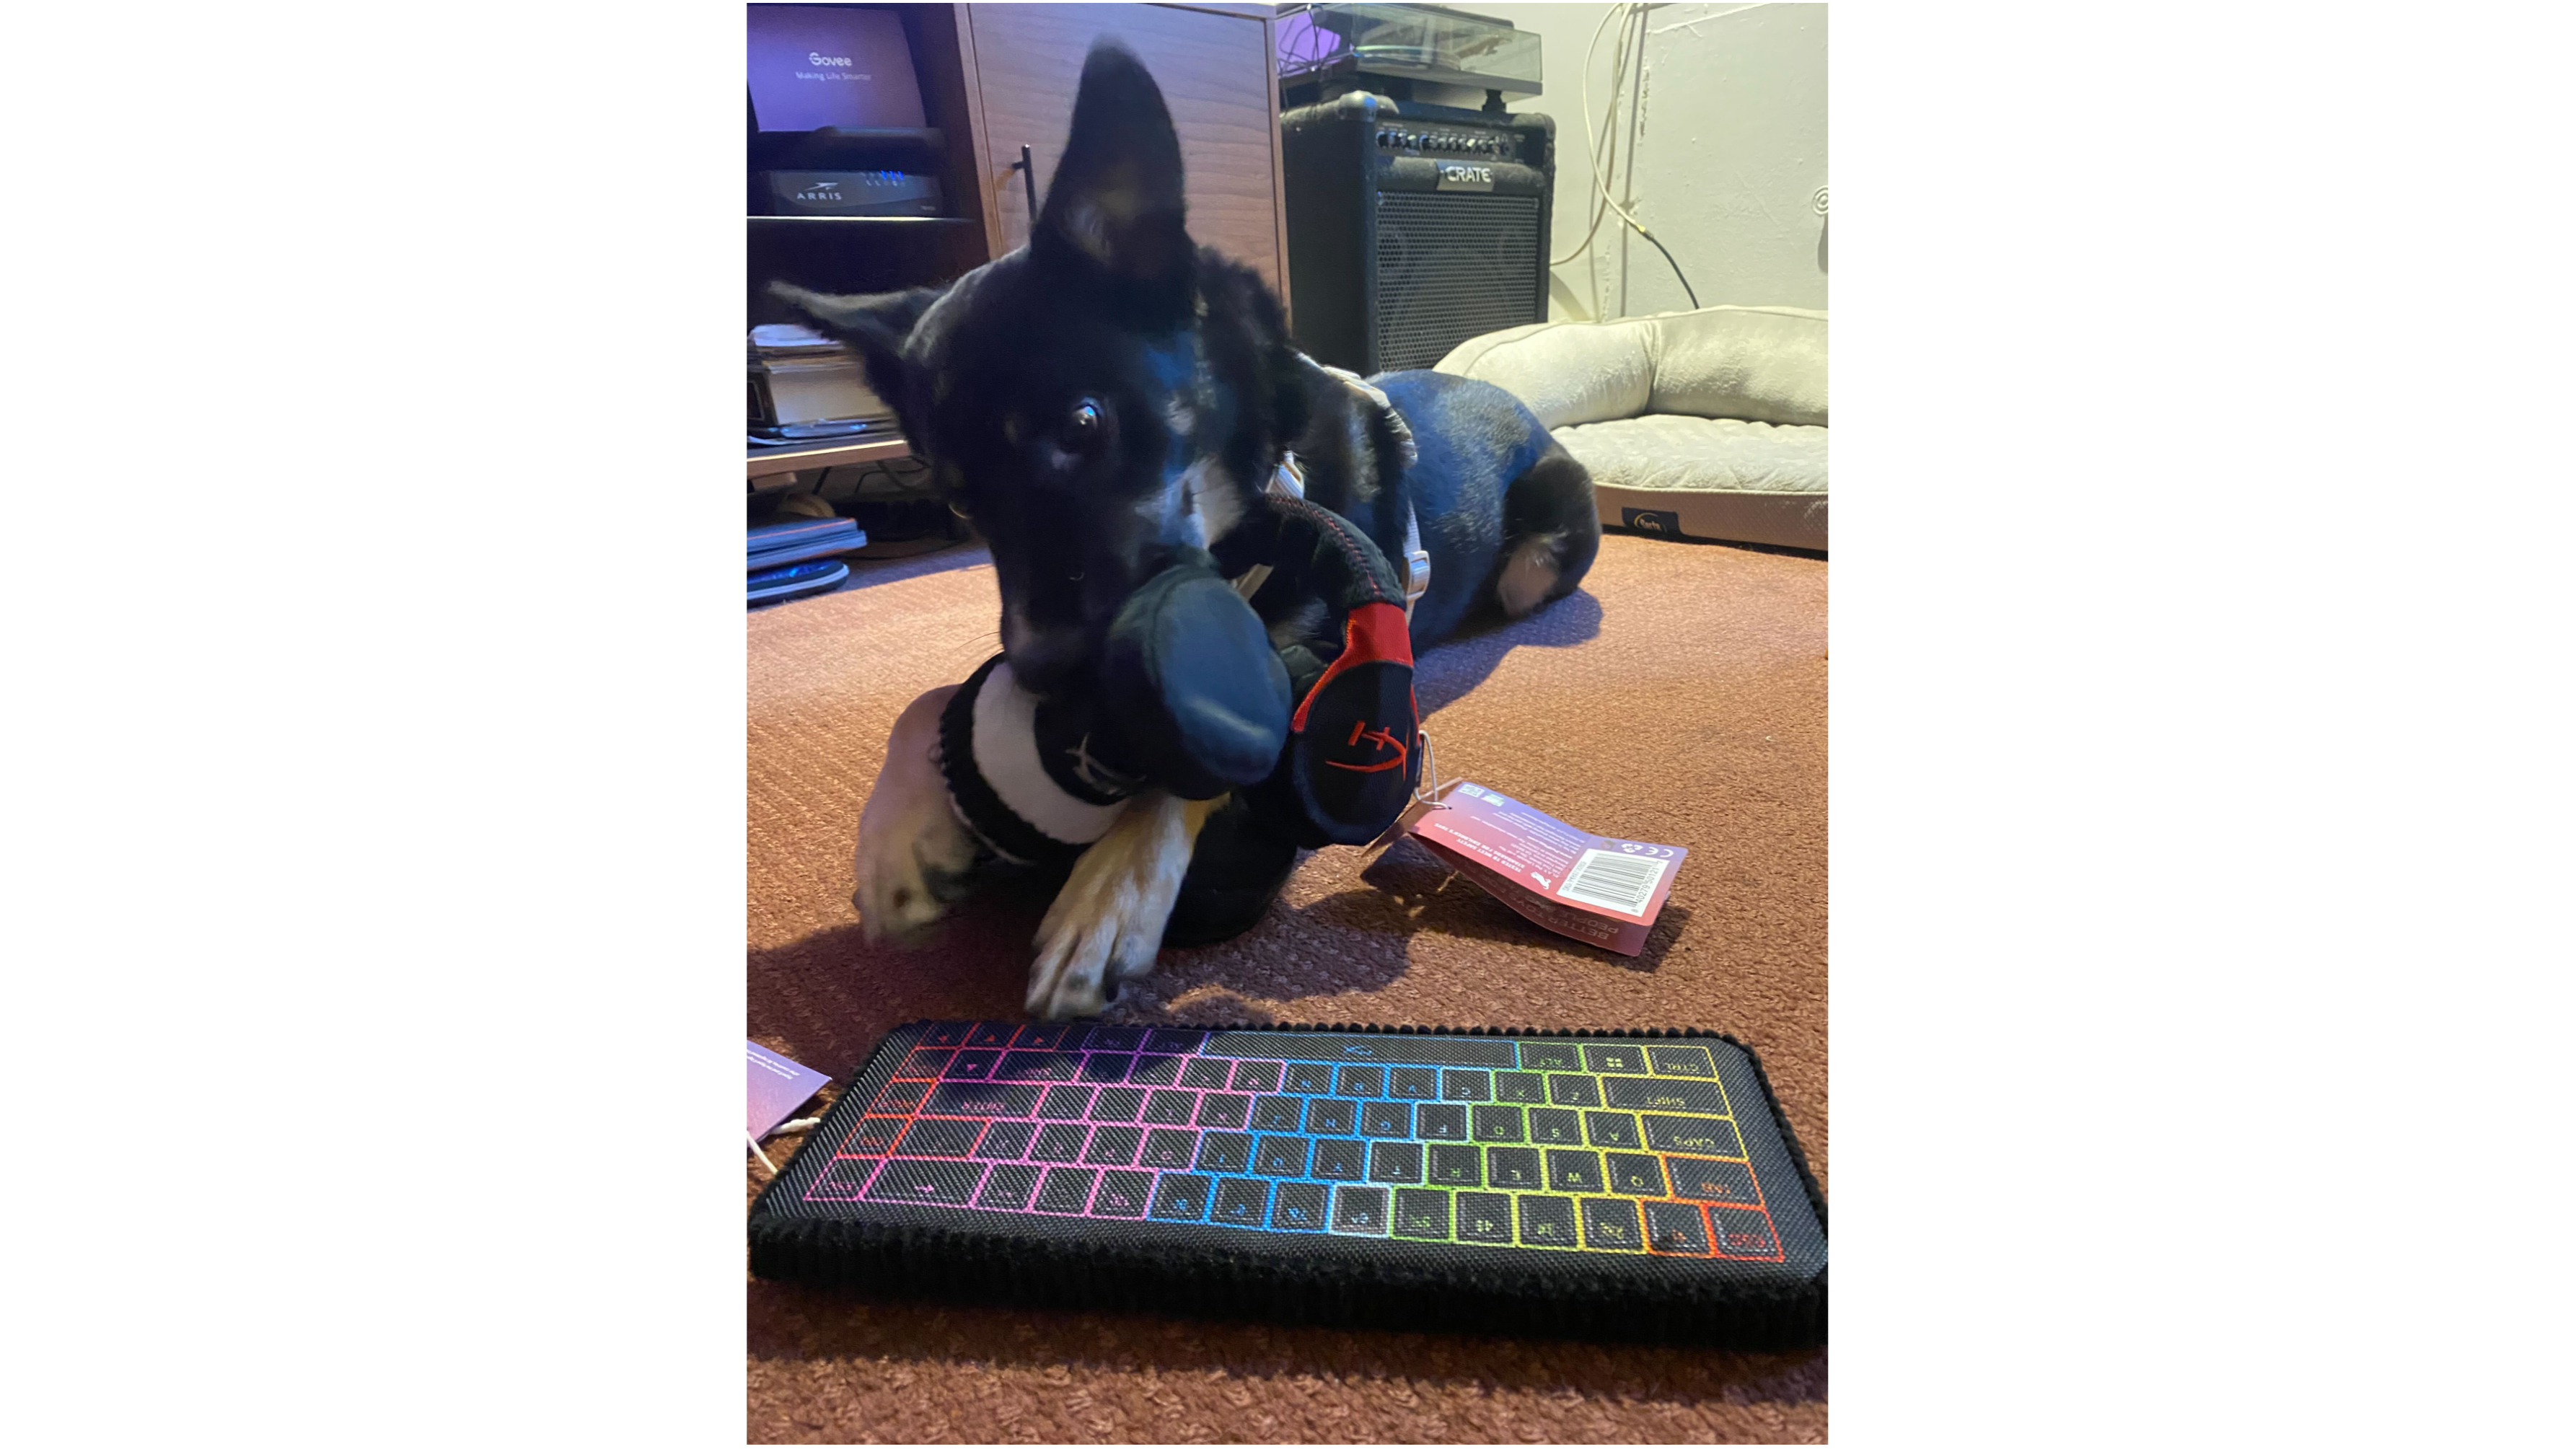 PC Gamer reader, Sydney the Dog.